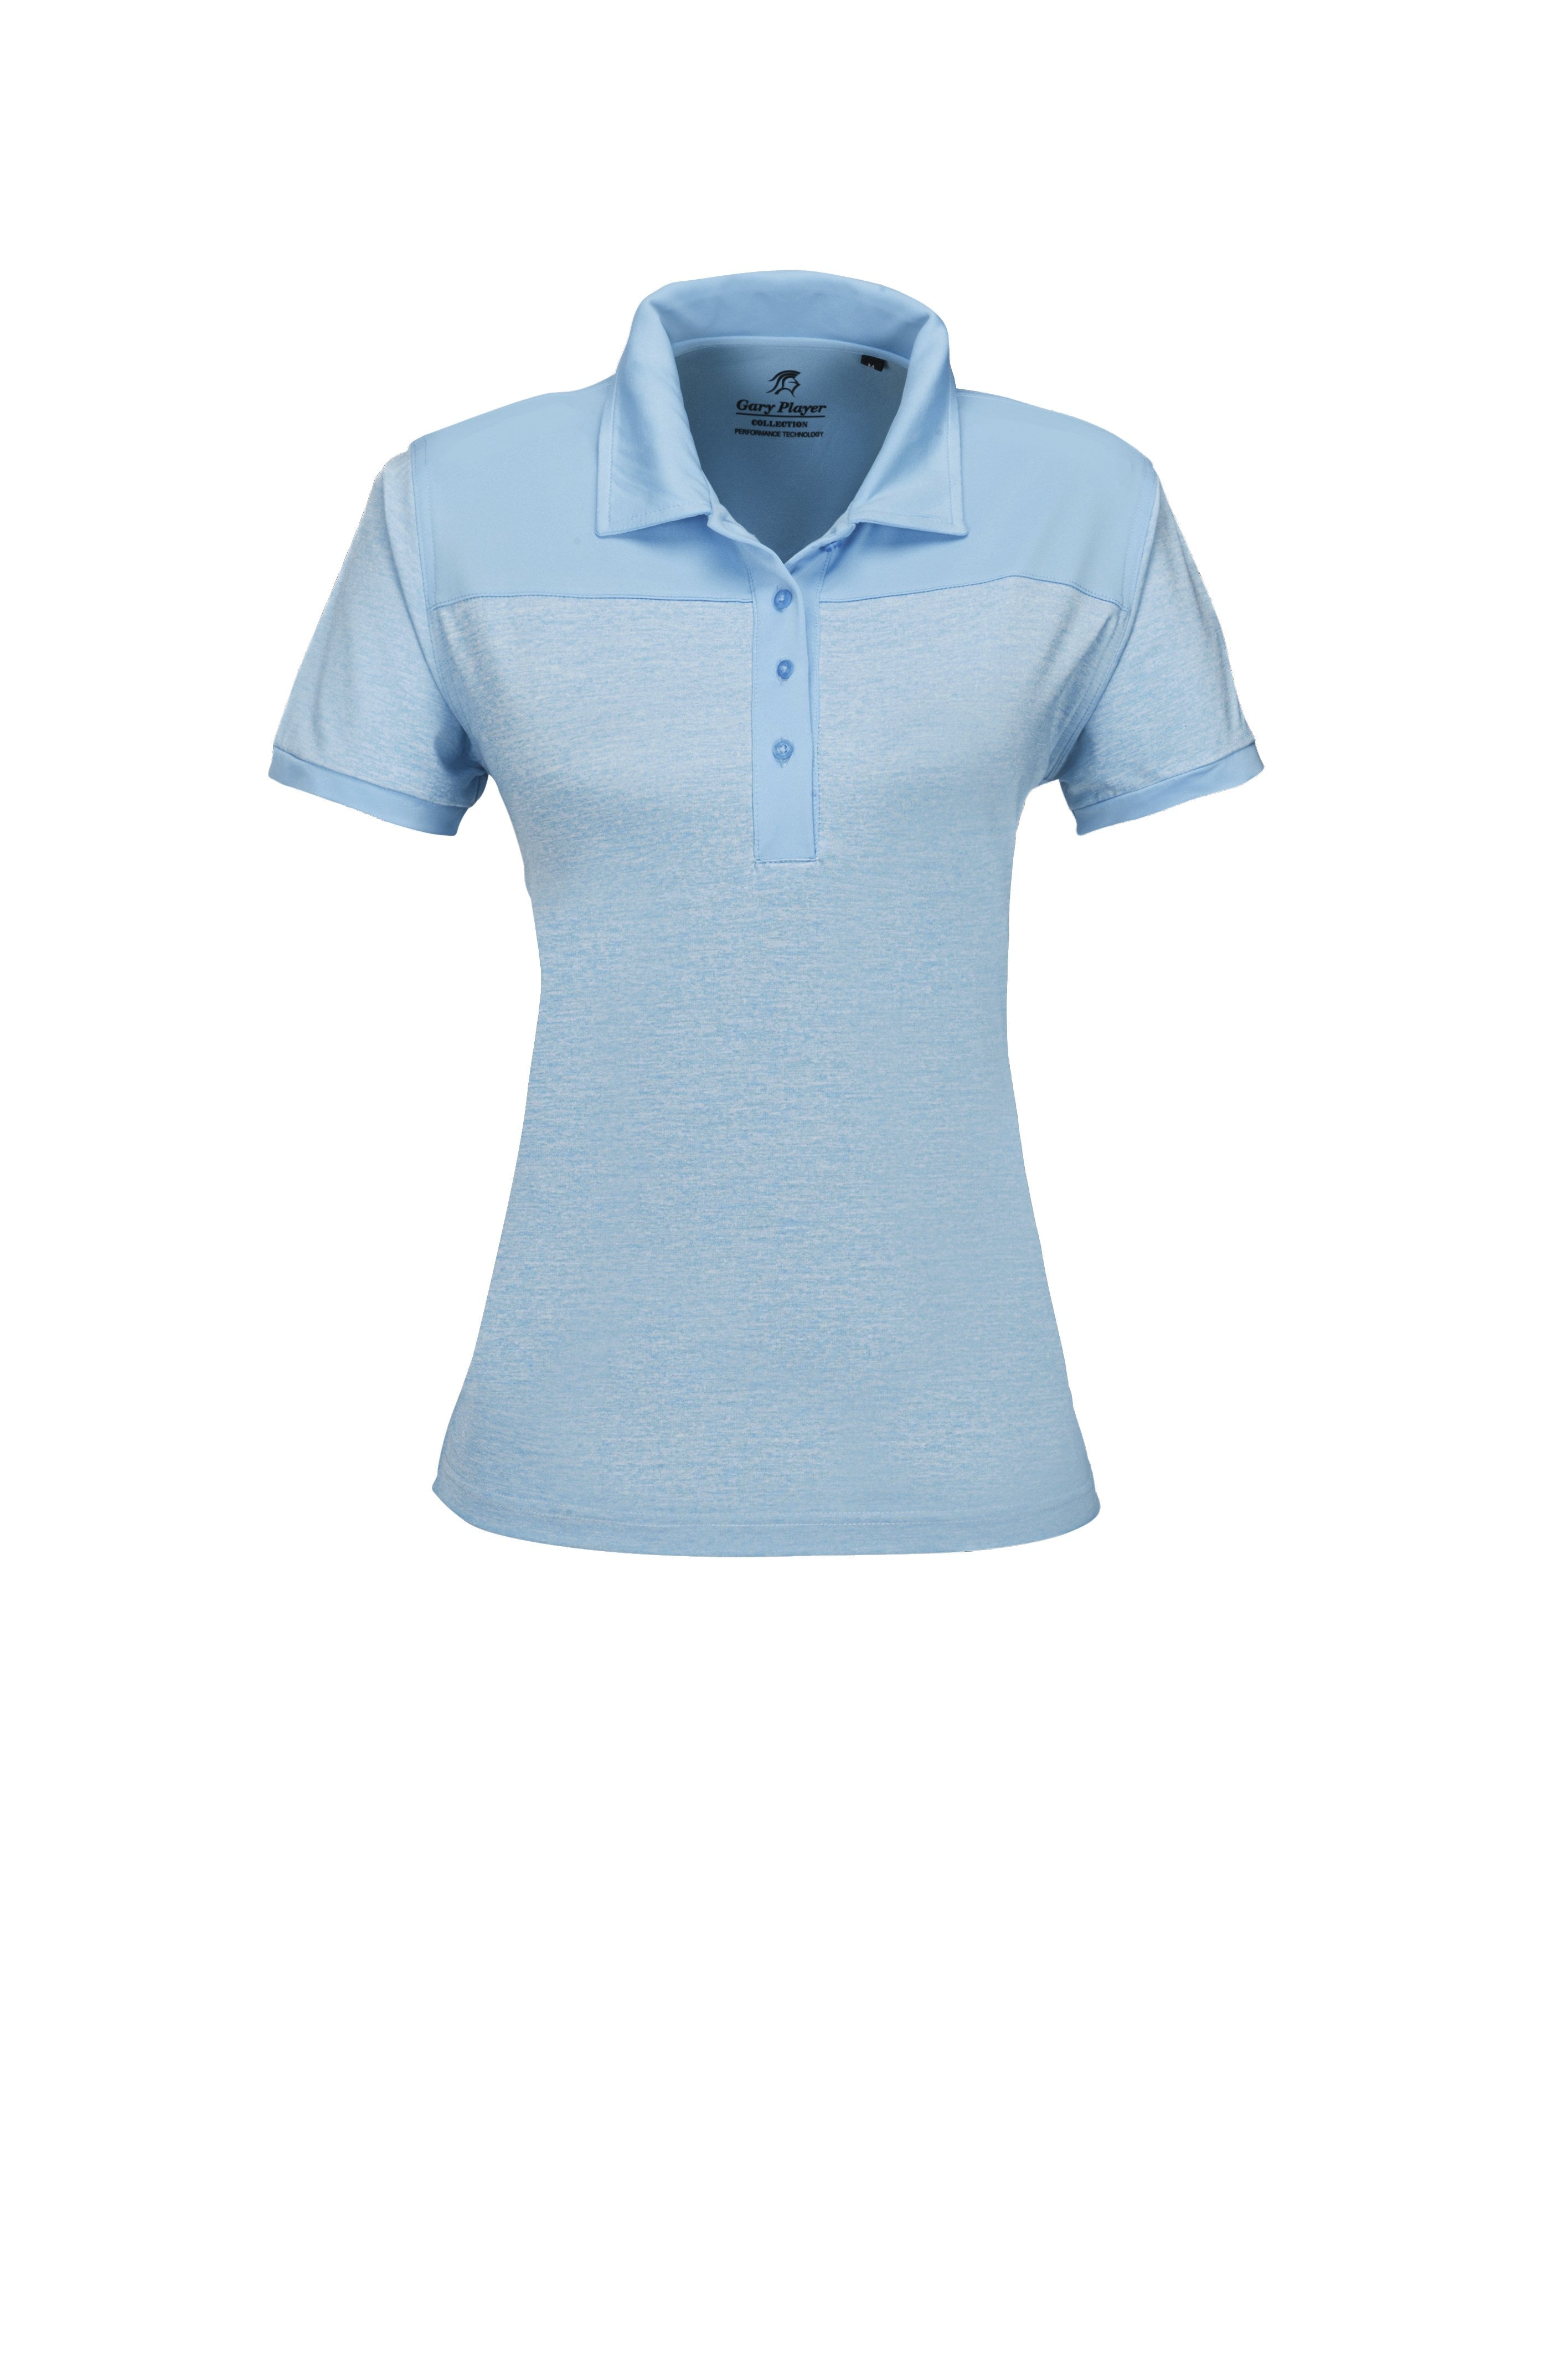 Ladies Baytree Golf Shirt - Light Blue Only-2XL-Light Blue-LB